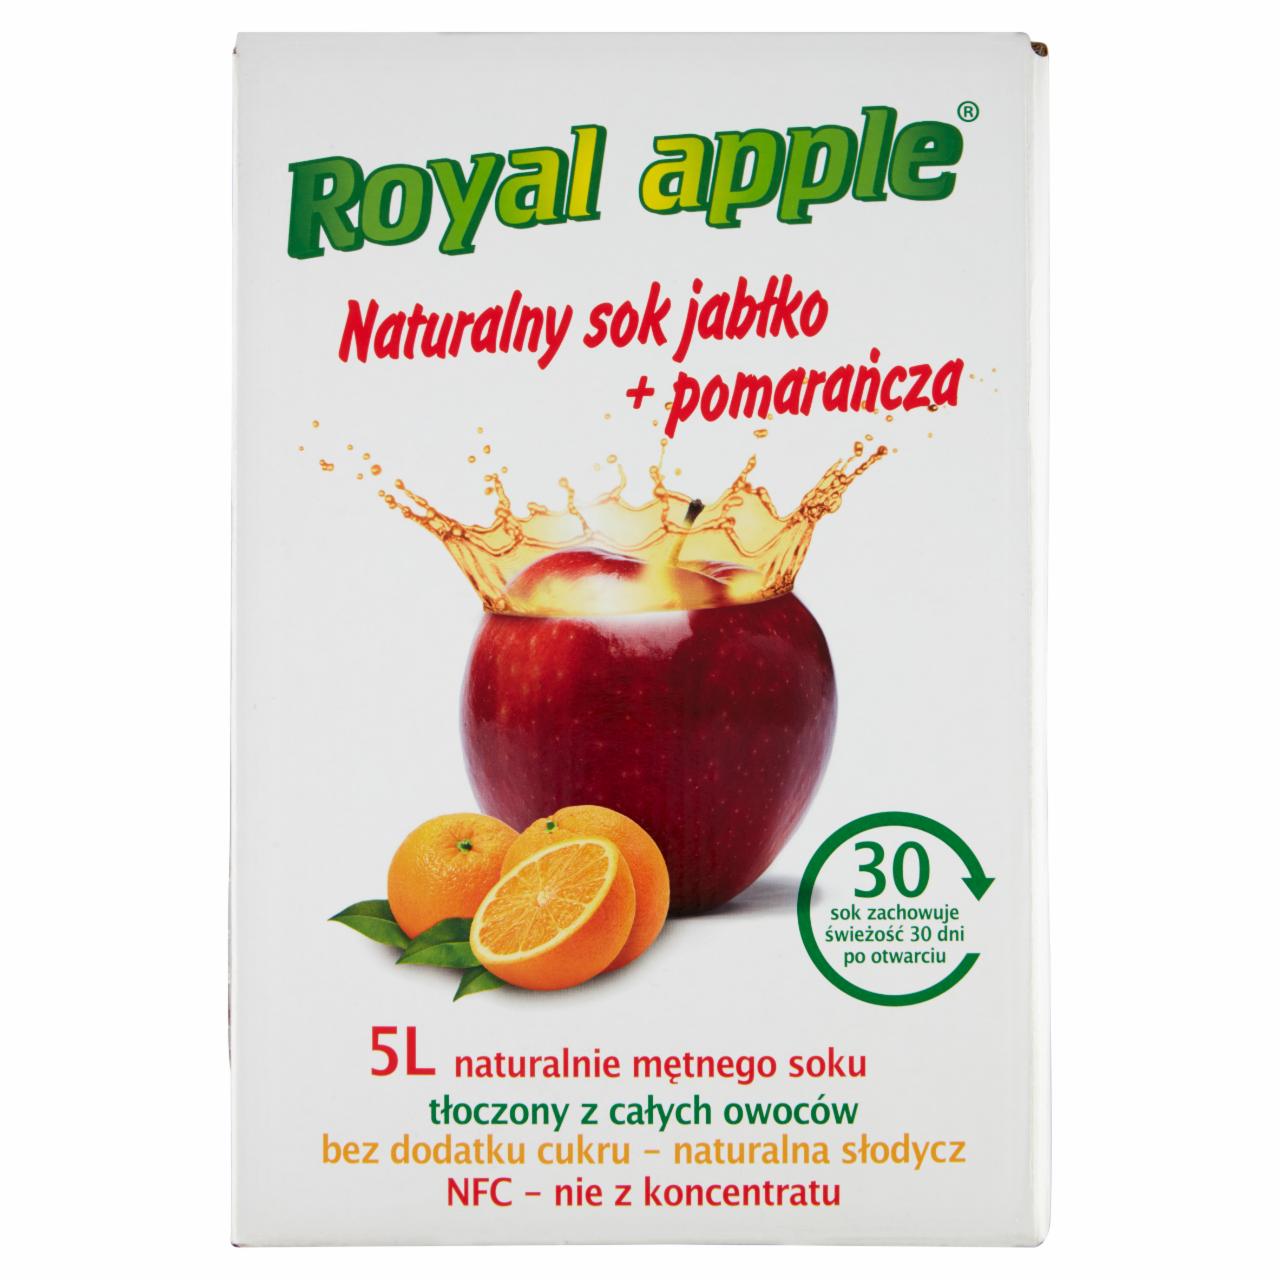 Zdjęcia - Royal apple Naturalny sok jabłko + pomarańcza 5 l